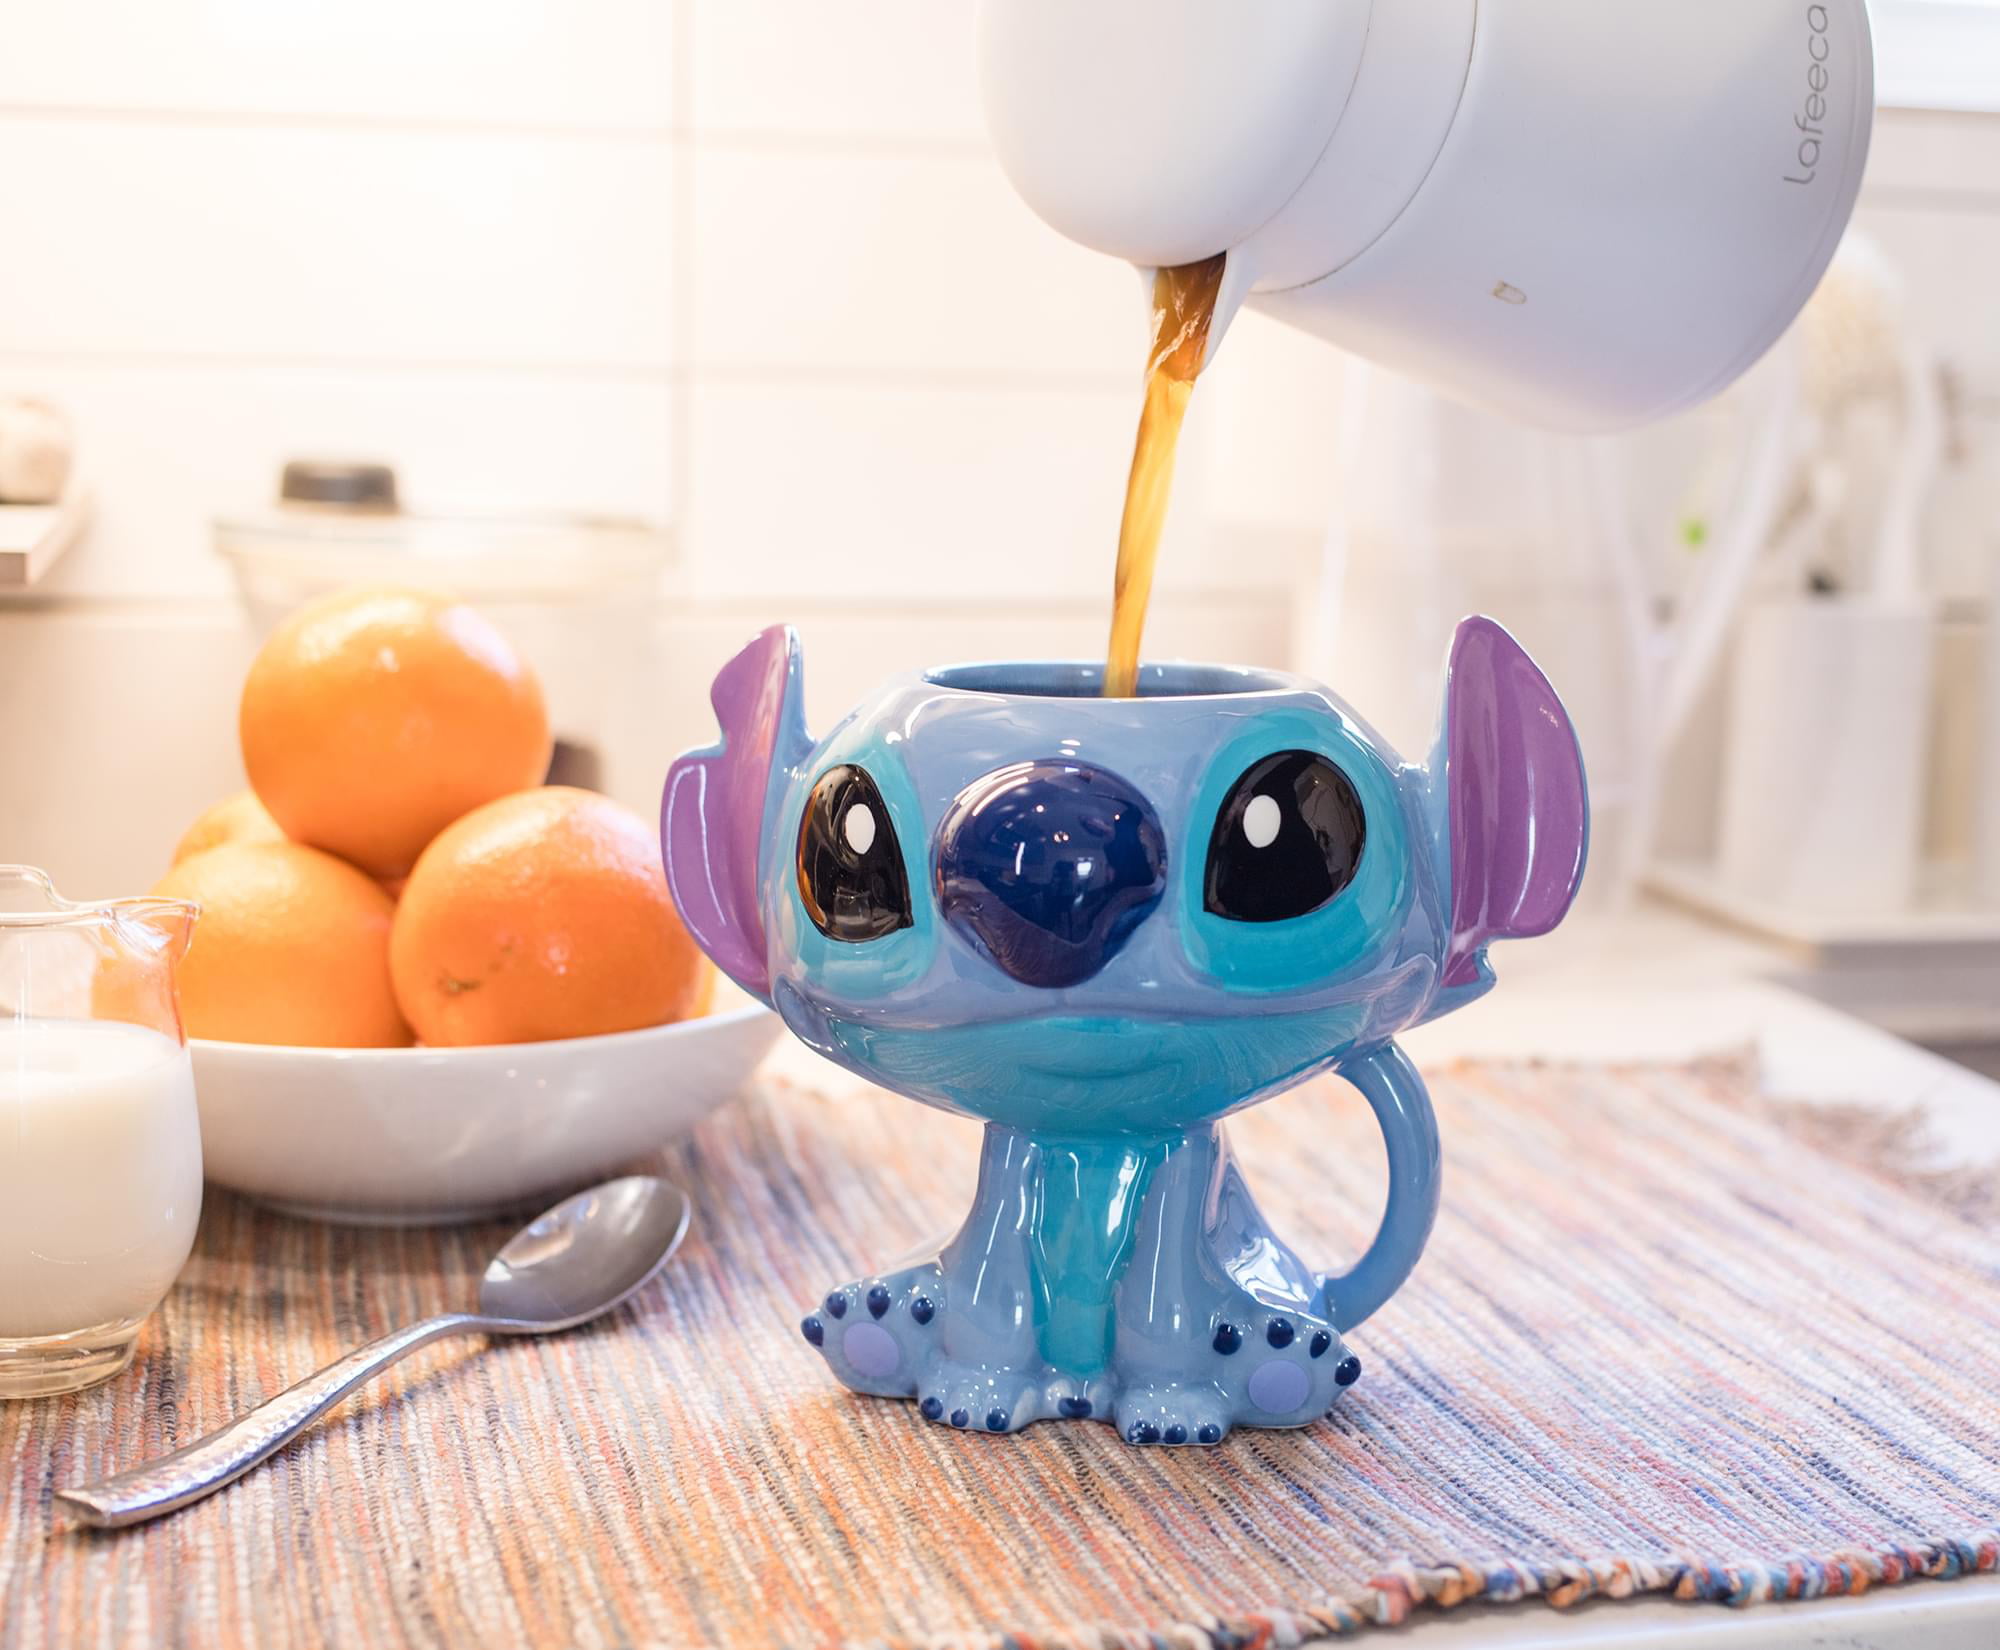 Disney Parks Lilo & Stitch 20 oz Coffee Tea Mug Cup 3D Mornings Bad Coffee  Good